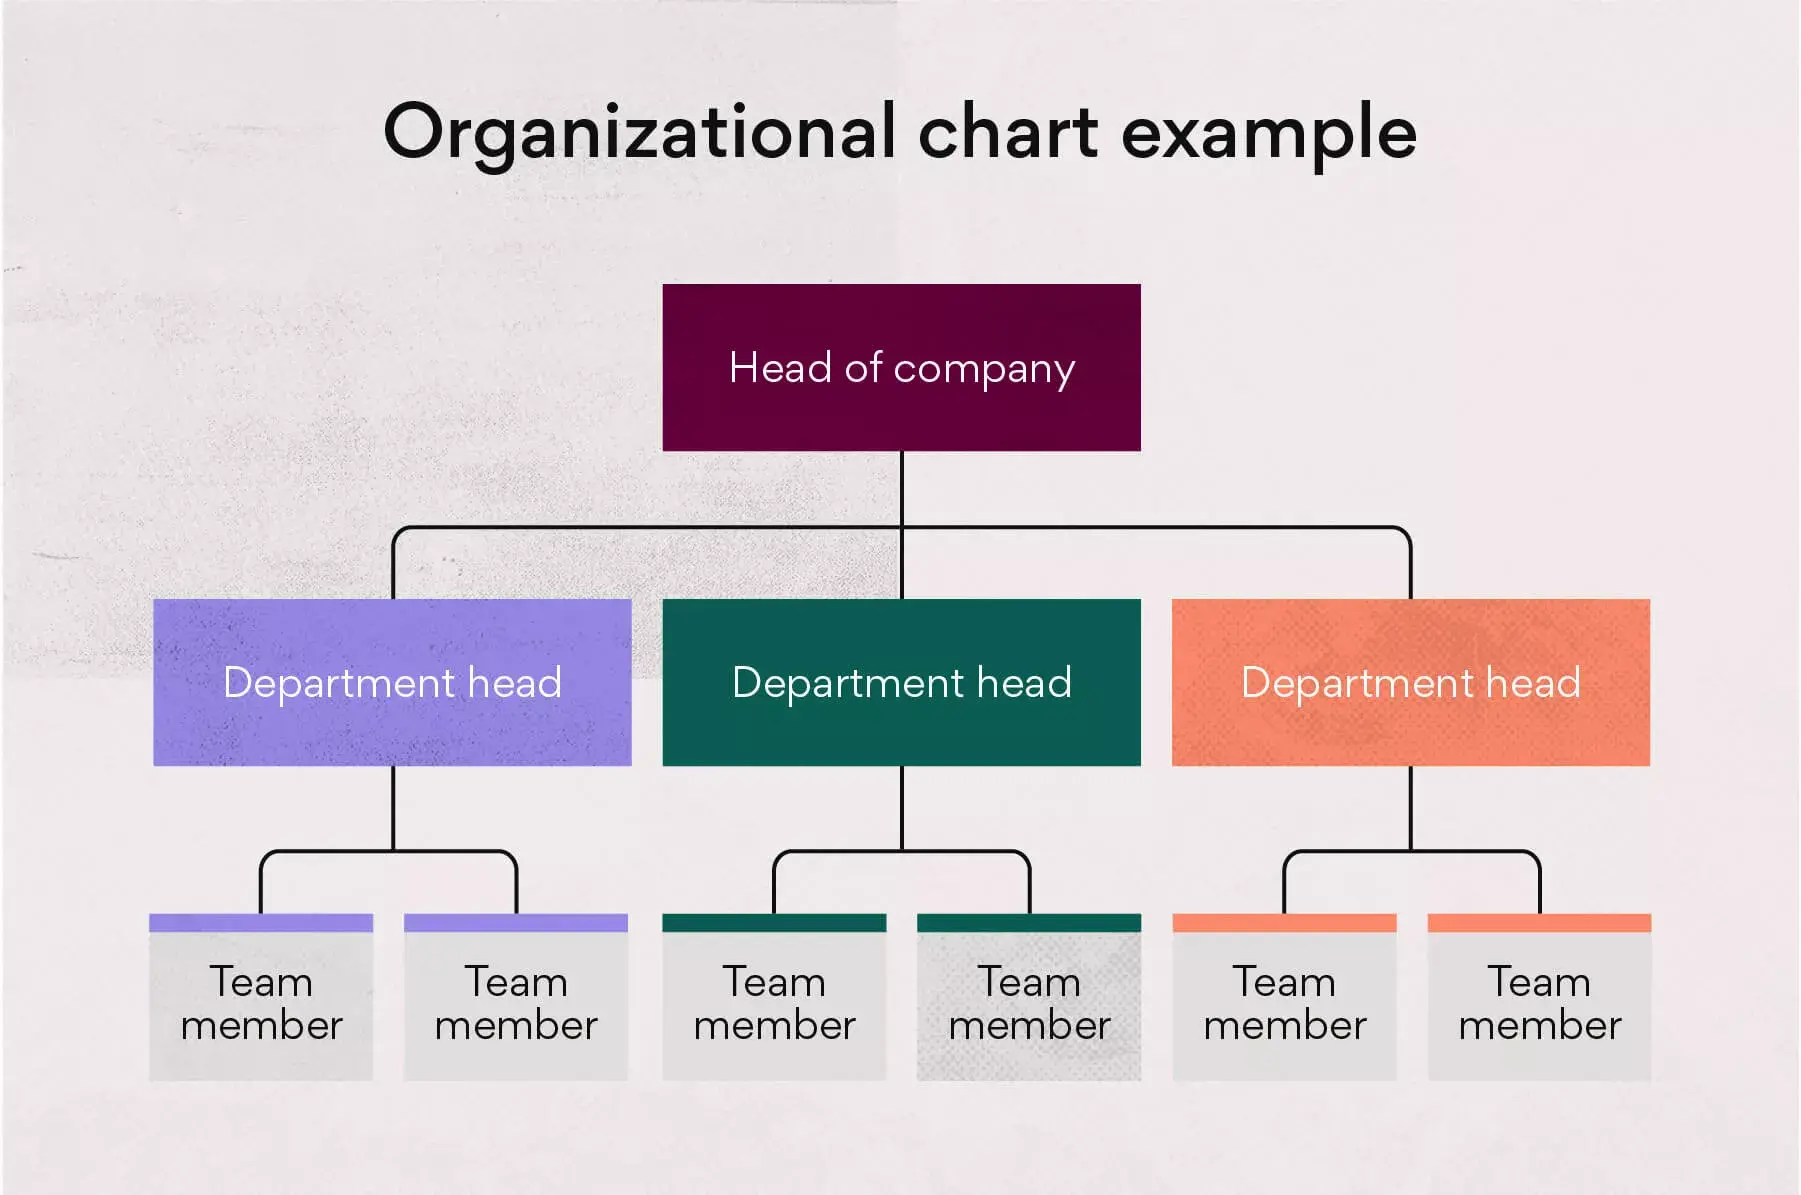 Organizational chart example